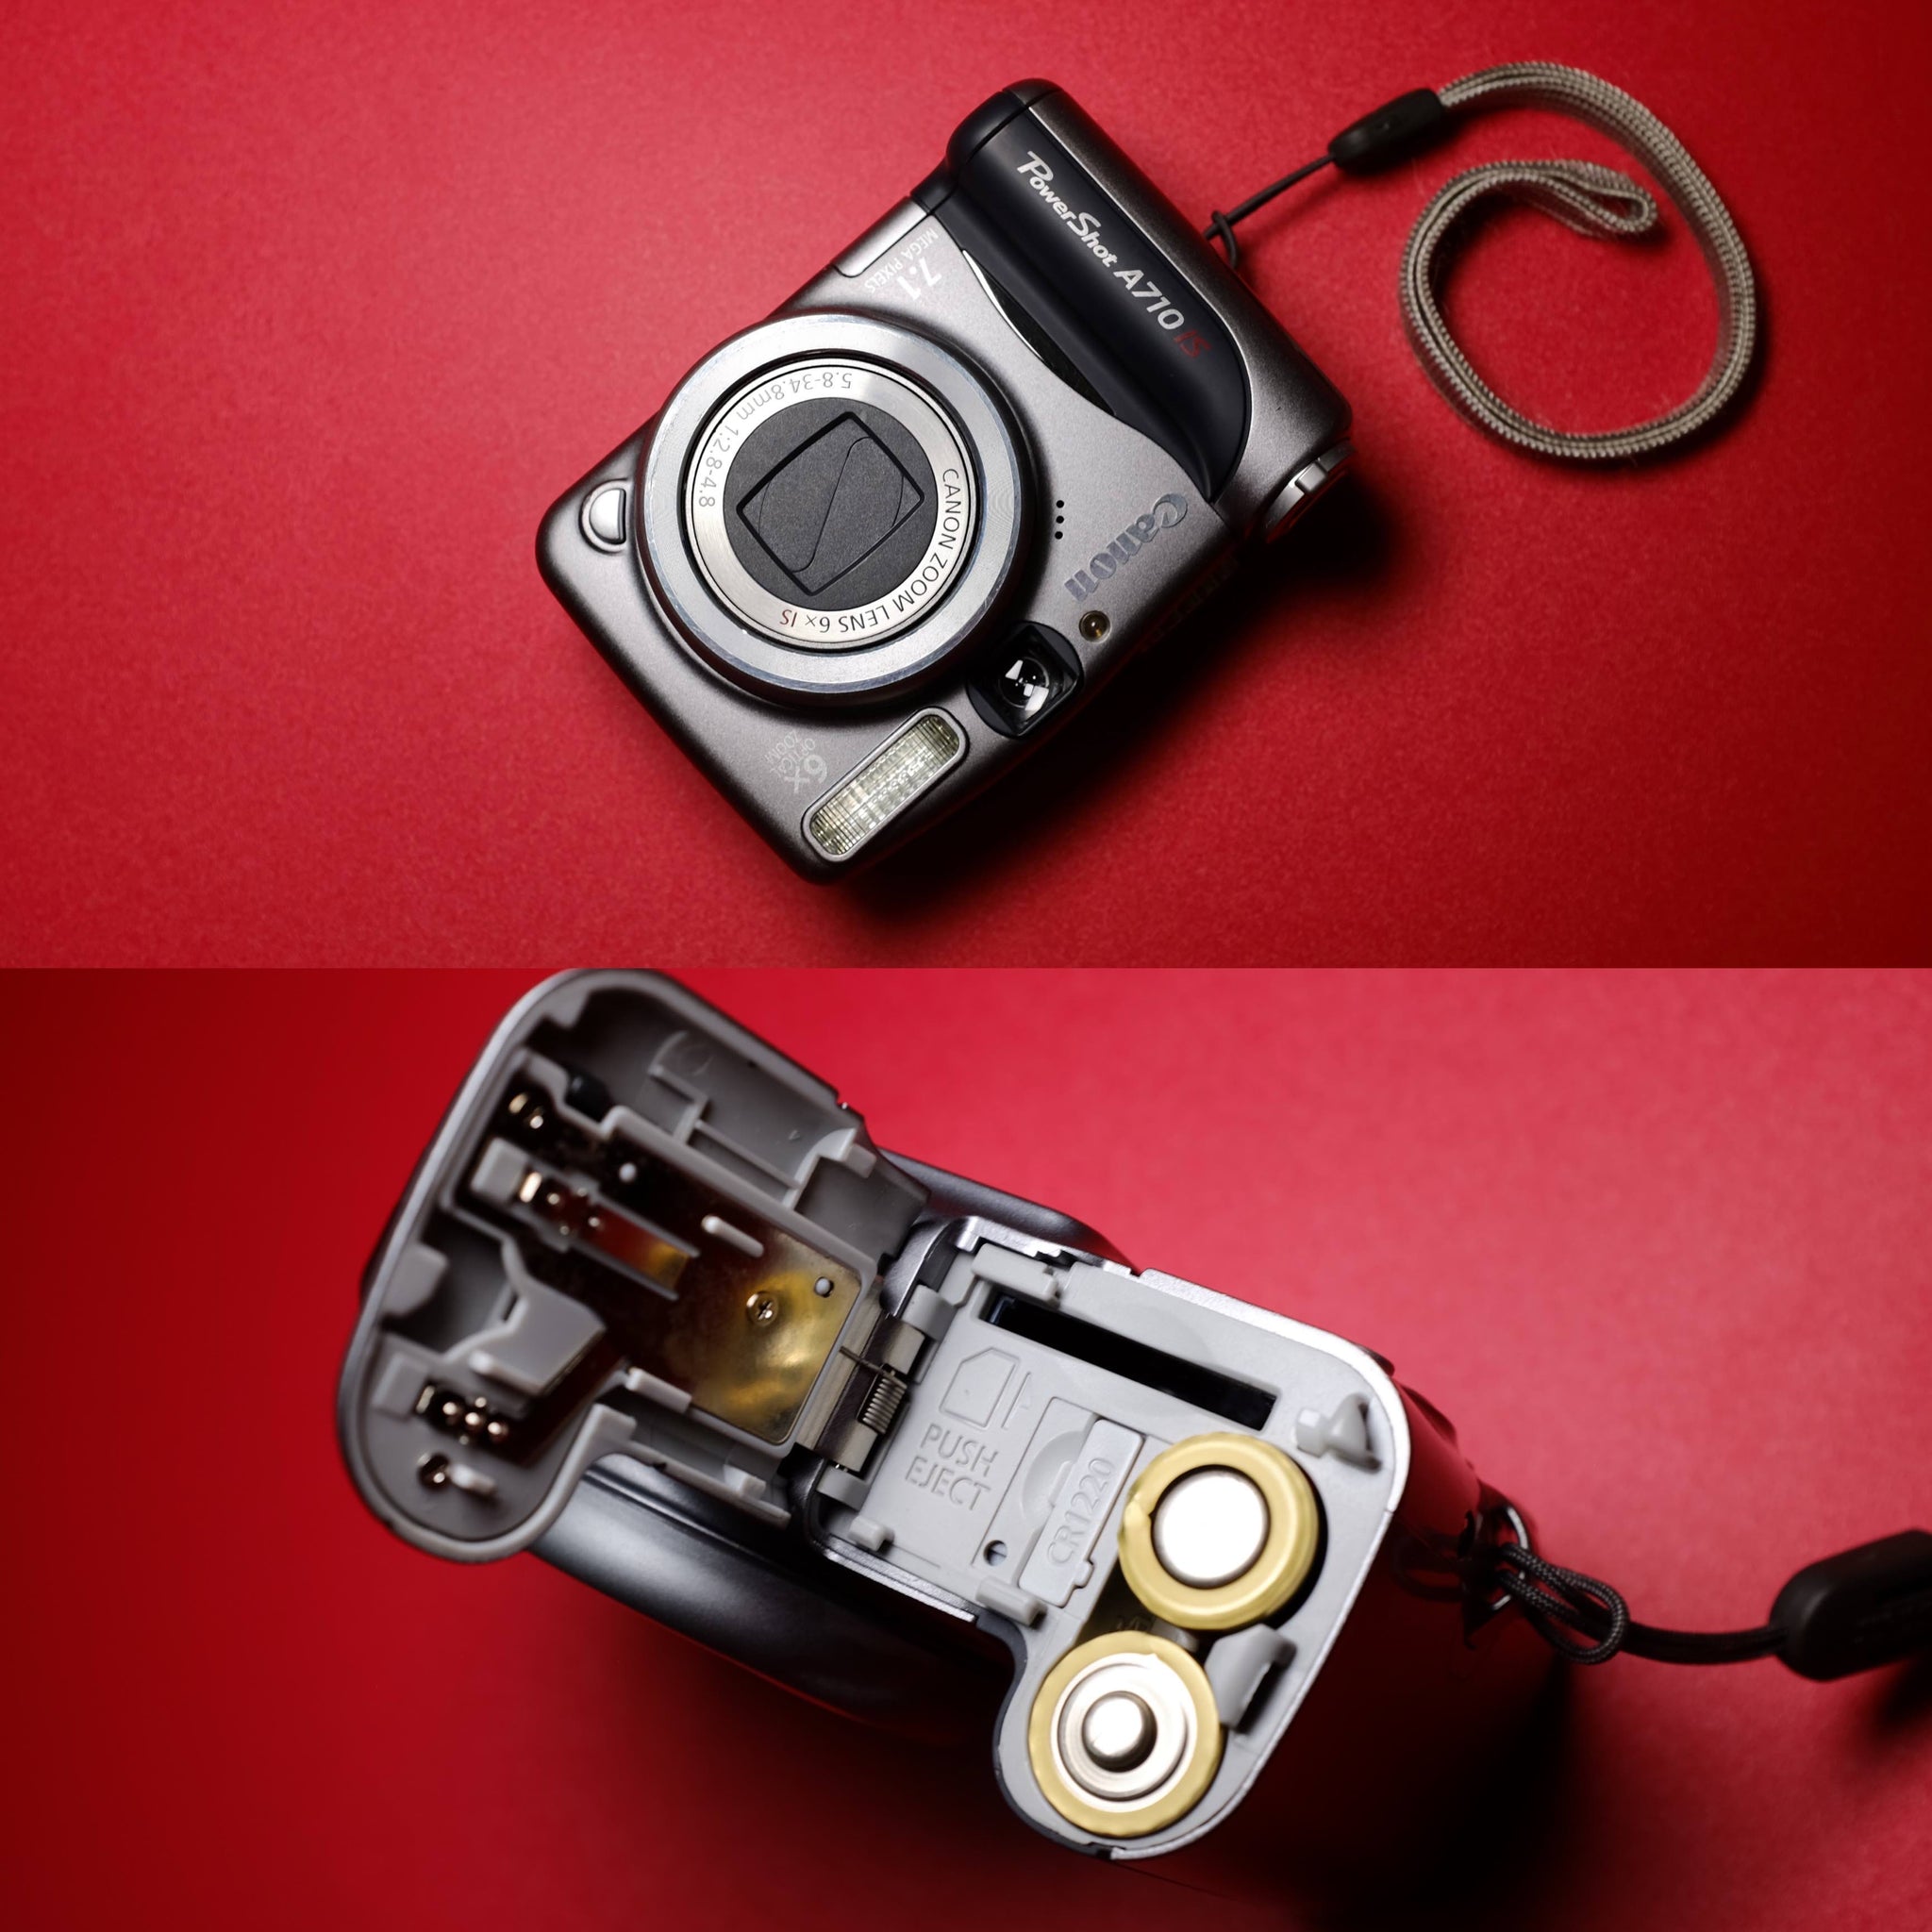 Canon PowerShot A710 IS 7.1MP Digital Camera